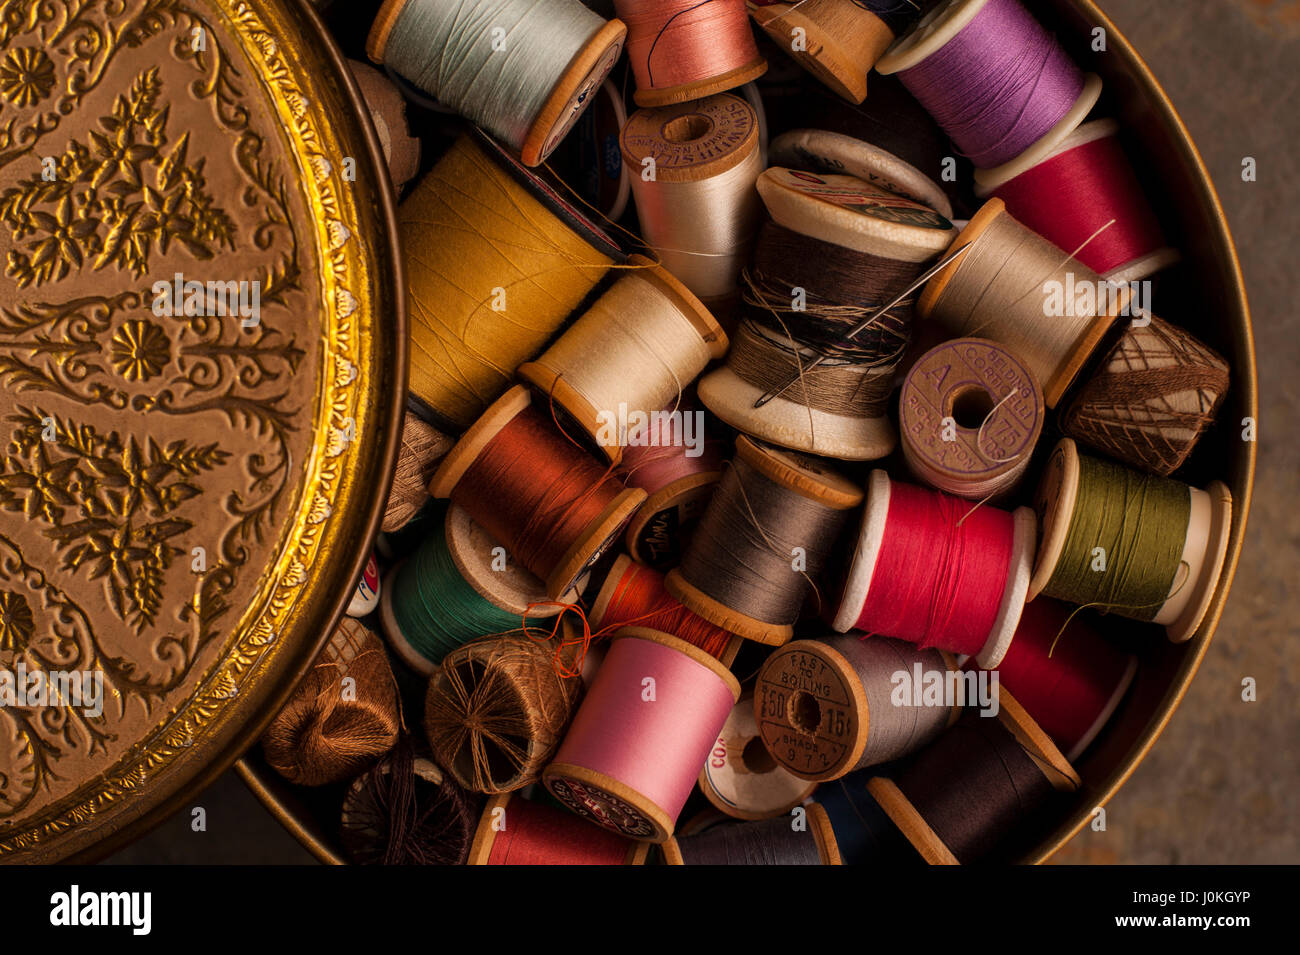 15 Spools Of Thread In Tin Box